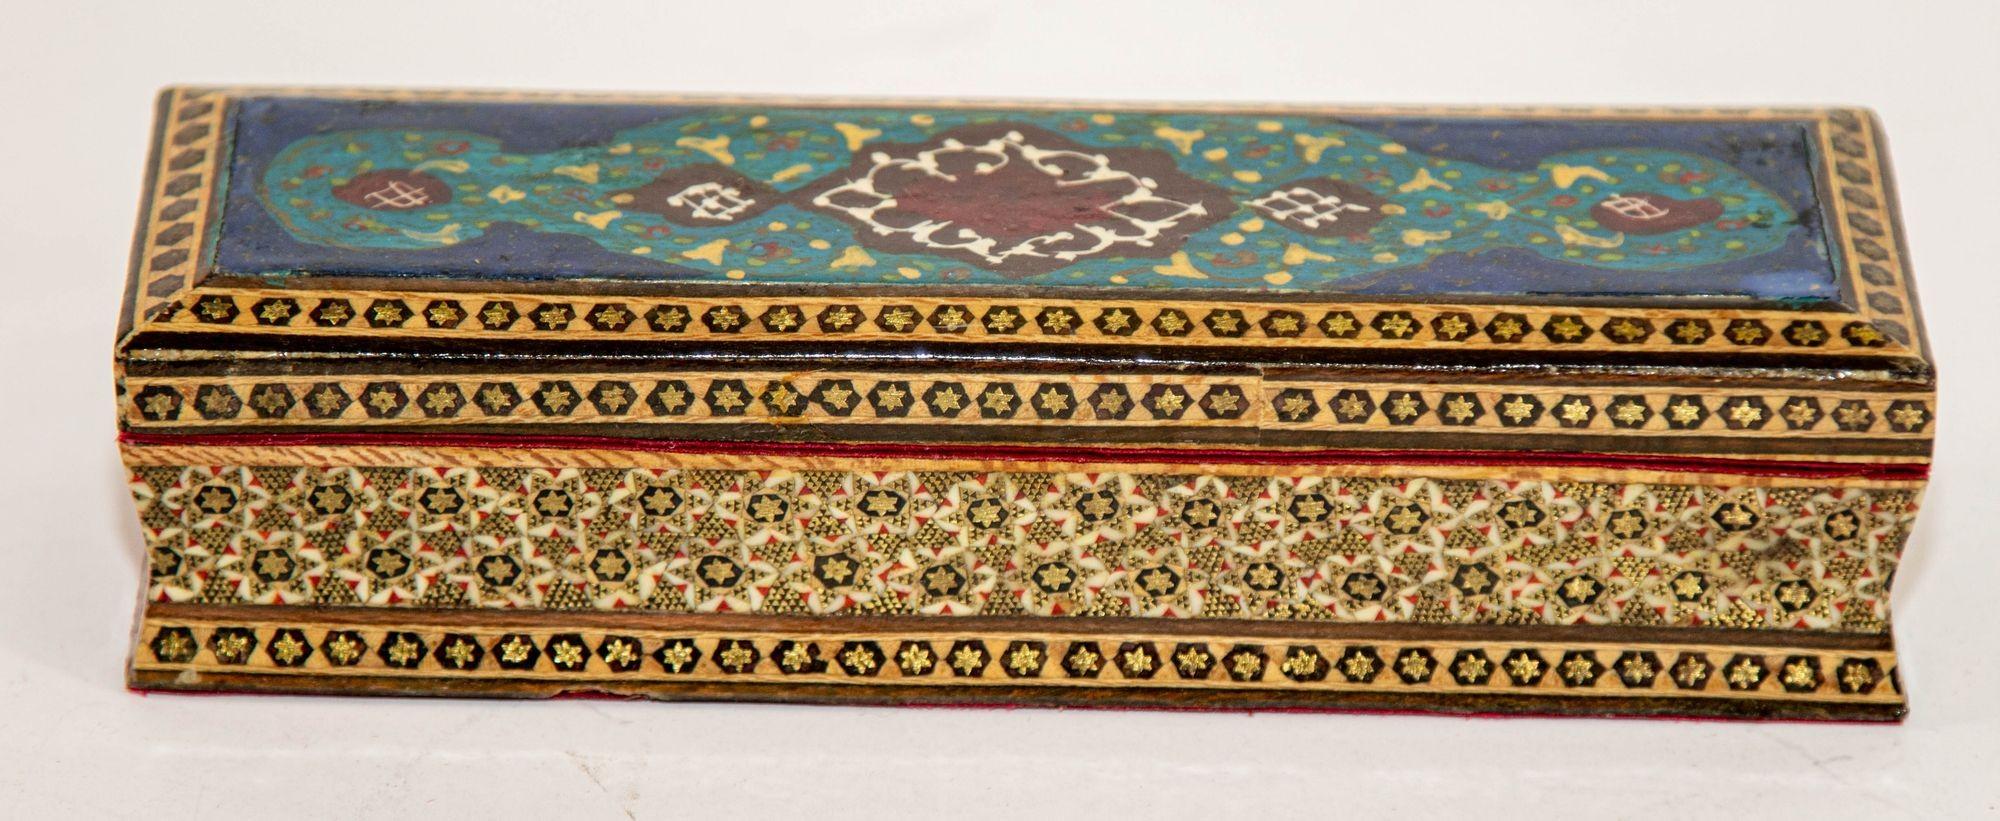 Lebanese Micro Mosaic Moorish Inlaid Jewelry Pen Box For Sale